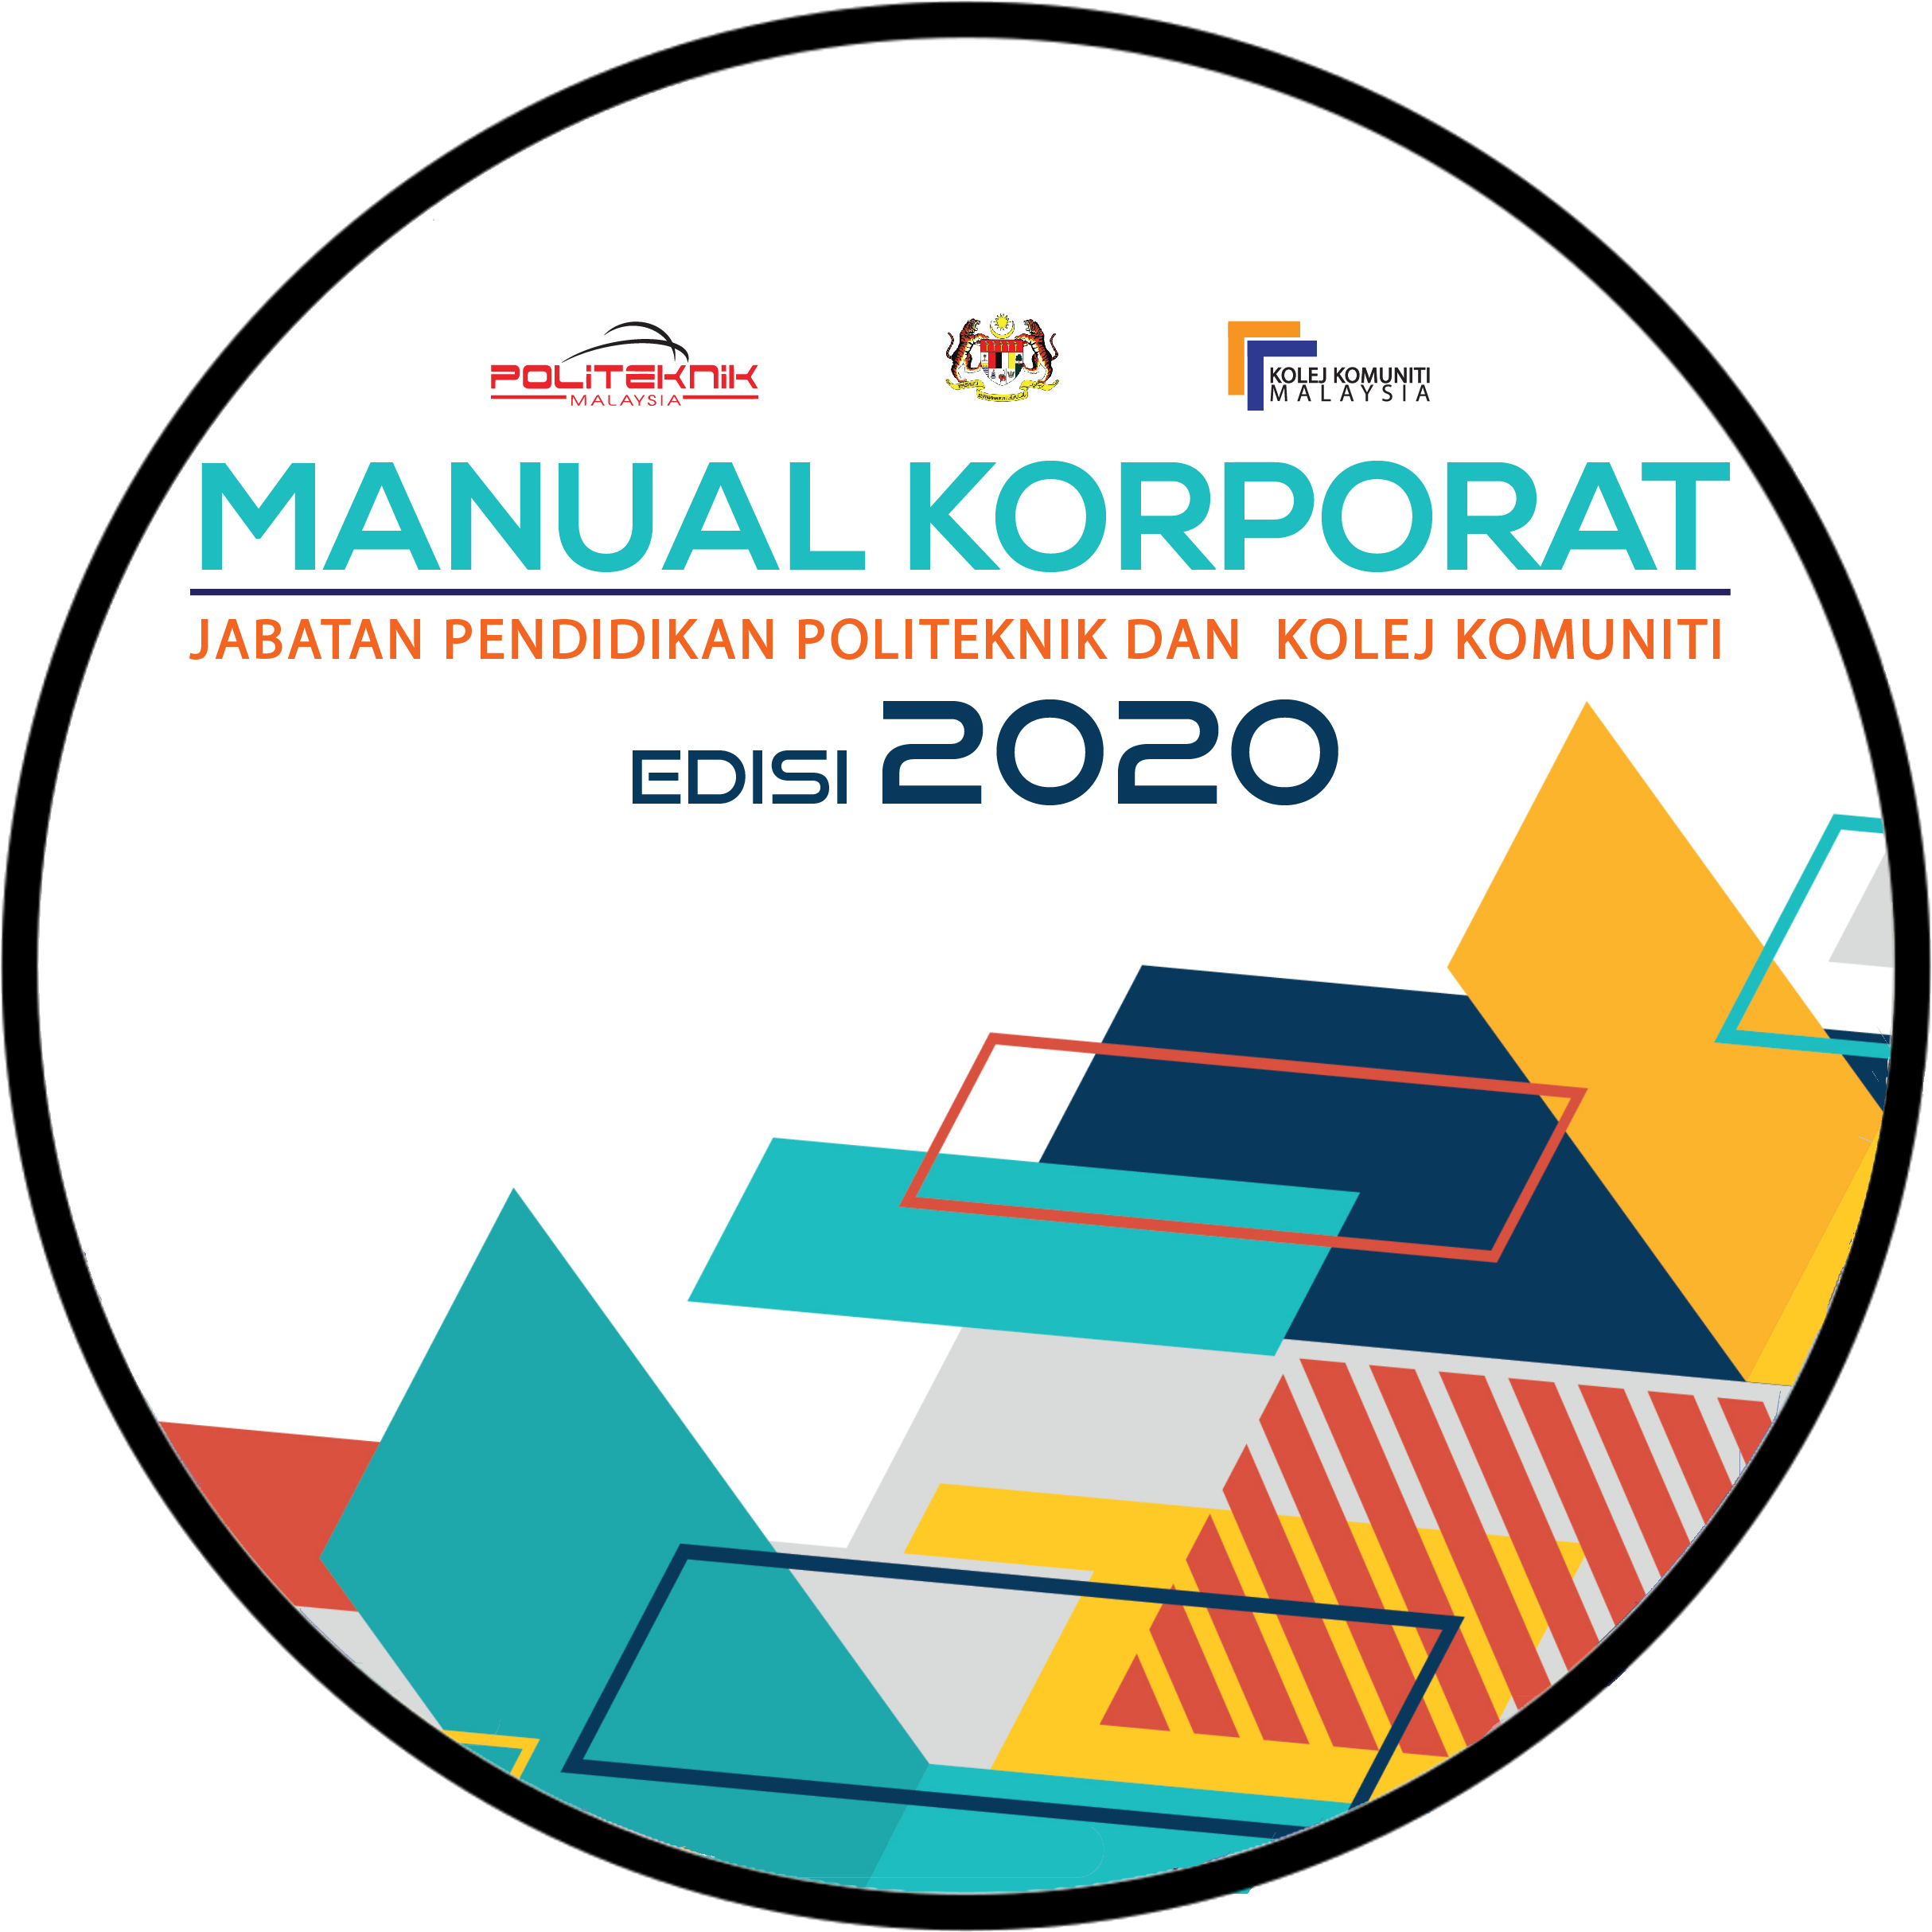 Manual Korporat JPPKK 2020